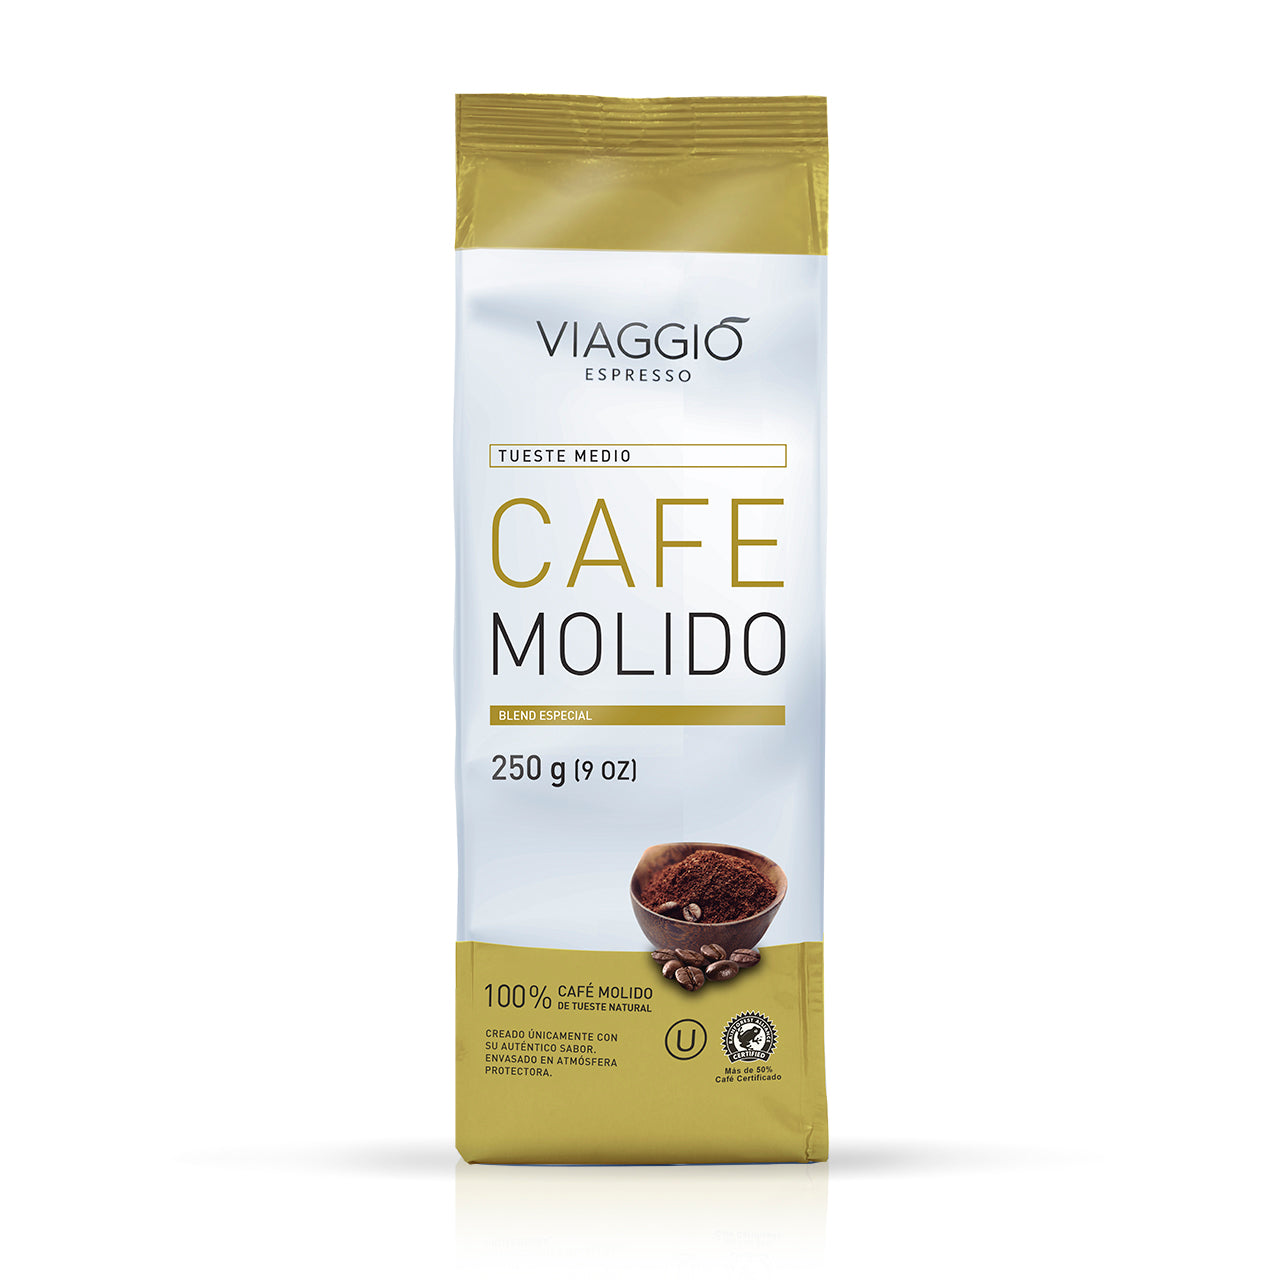 Tueste Medio | 250 gr. de Café Molido Café Molido Viaggio Espresso Viaggio Espresso - Viaggio Espresso